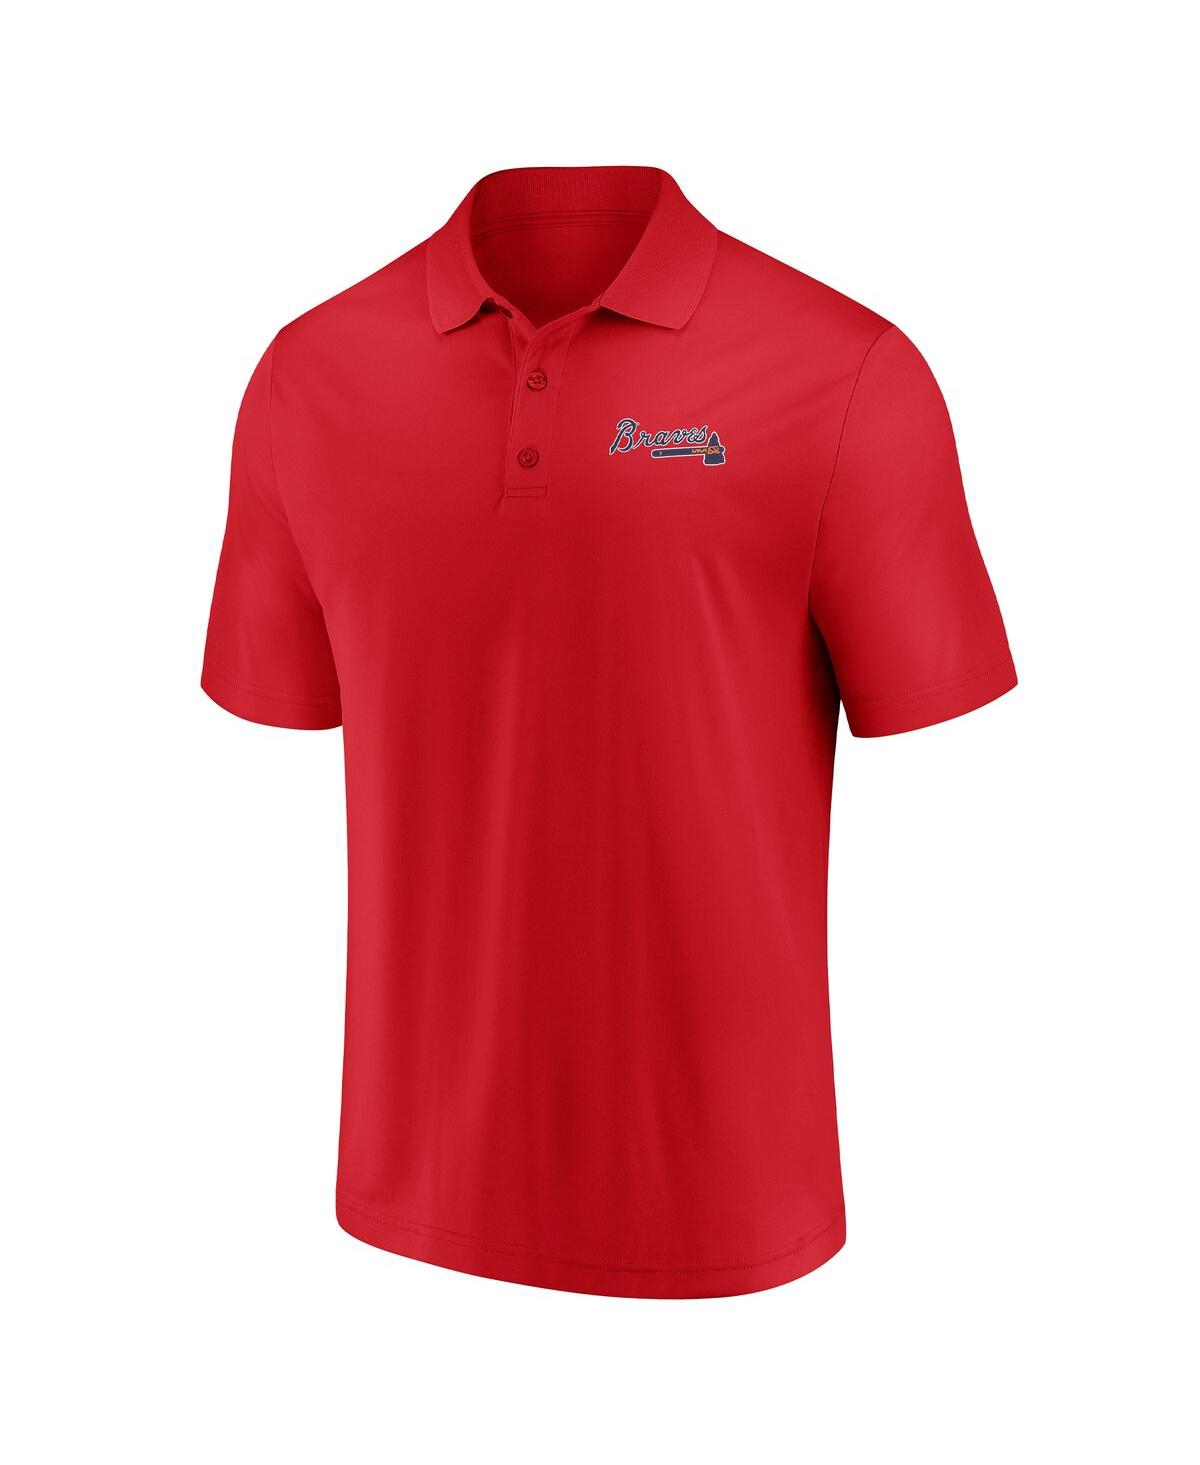 Shop Fanatics Men's  Navy, Red Atlanta Braves Polo Shirt Combo Set In Navy,red